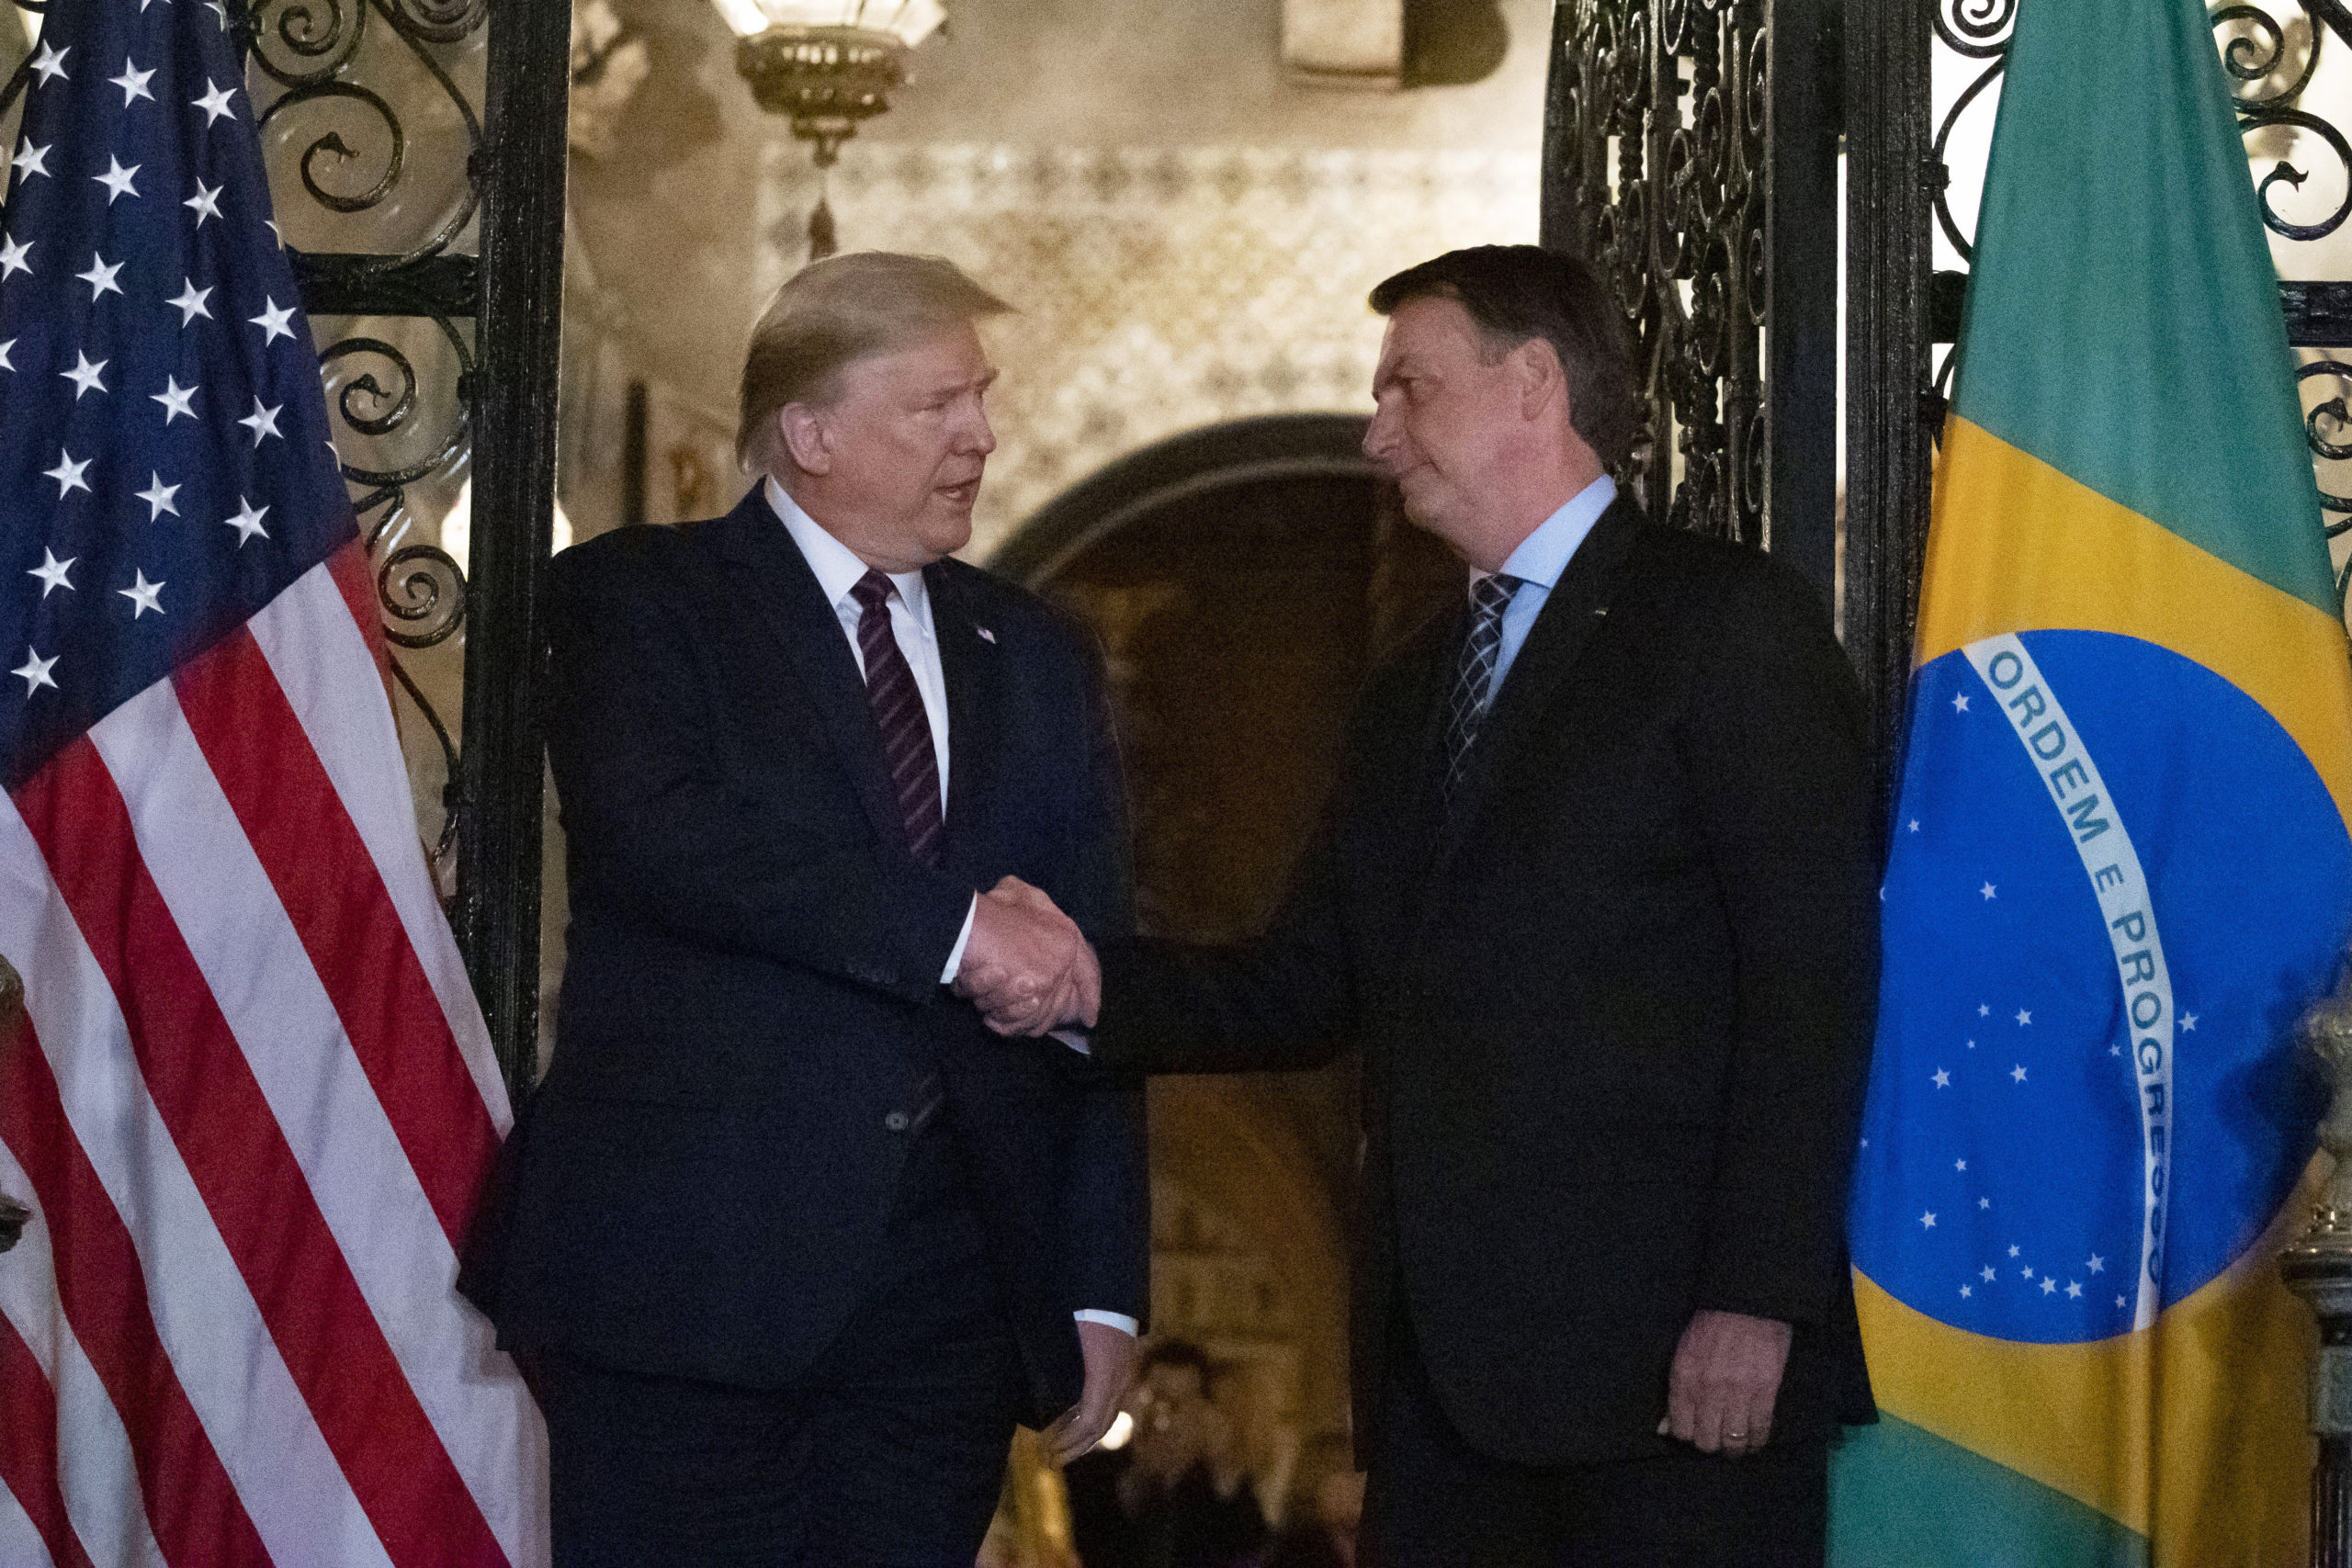 President Donald Trump shakes hands before a dinner with Brazilian President Jair Bolsonaro at Mar-a-Lago, Saturday, March 7, 2020, in Palm Beach, Fla. (AP Photo/Alex Brandon)